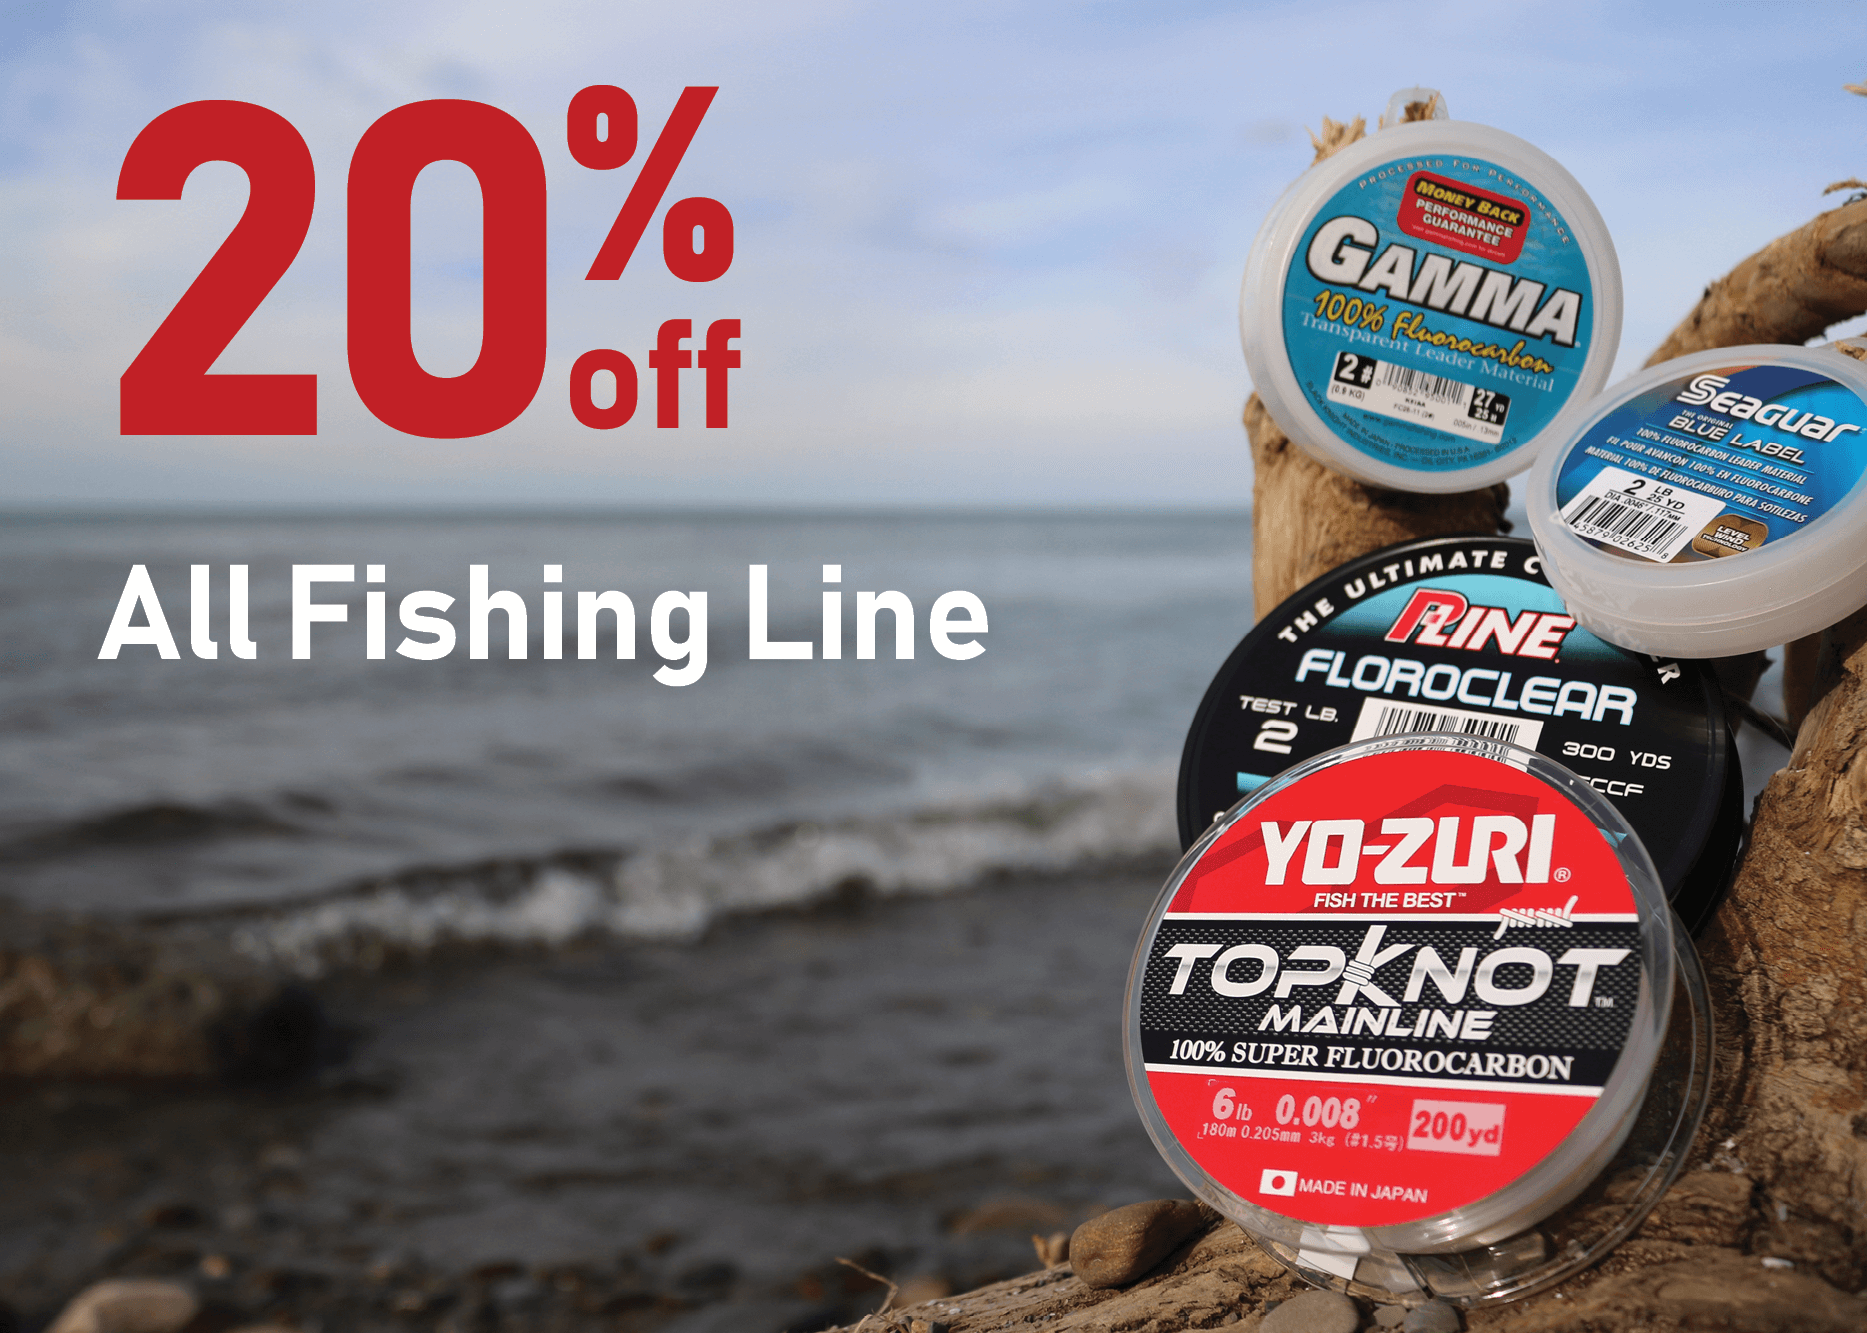 Save 20% on Fishing Line